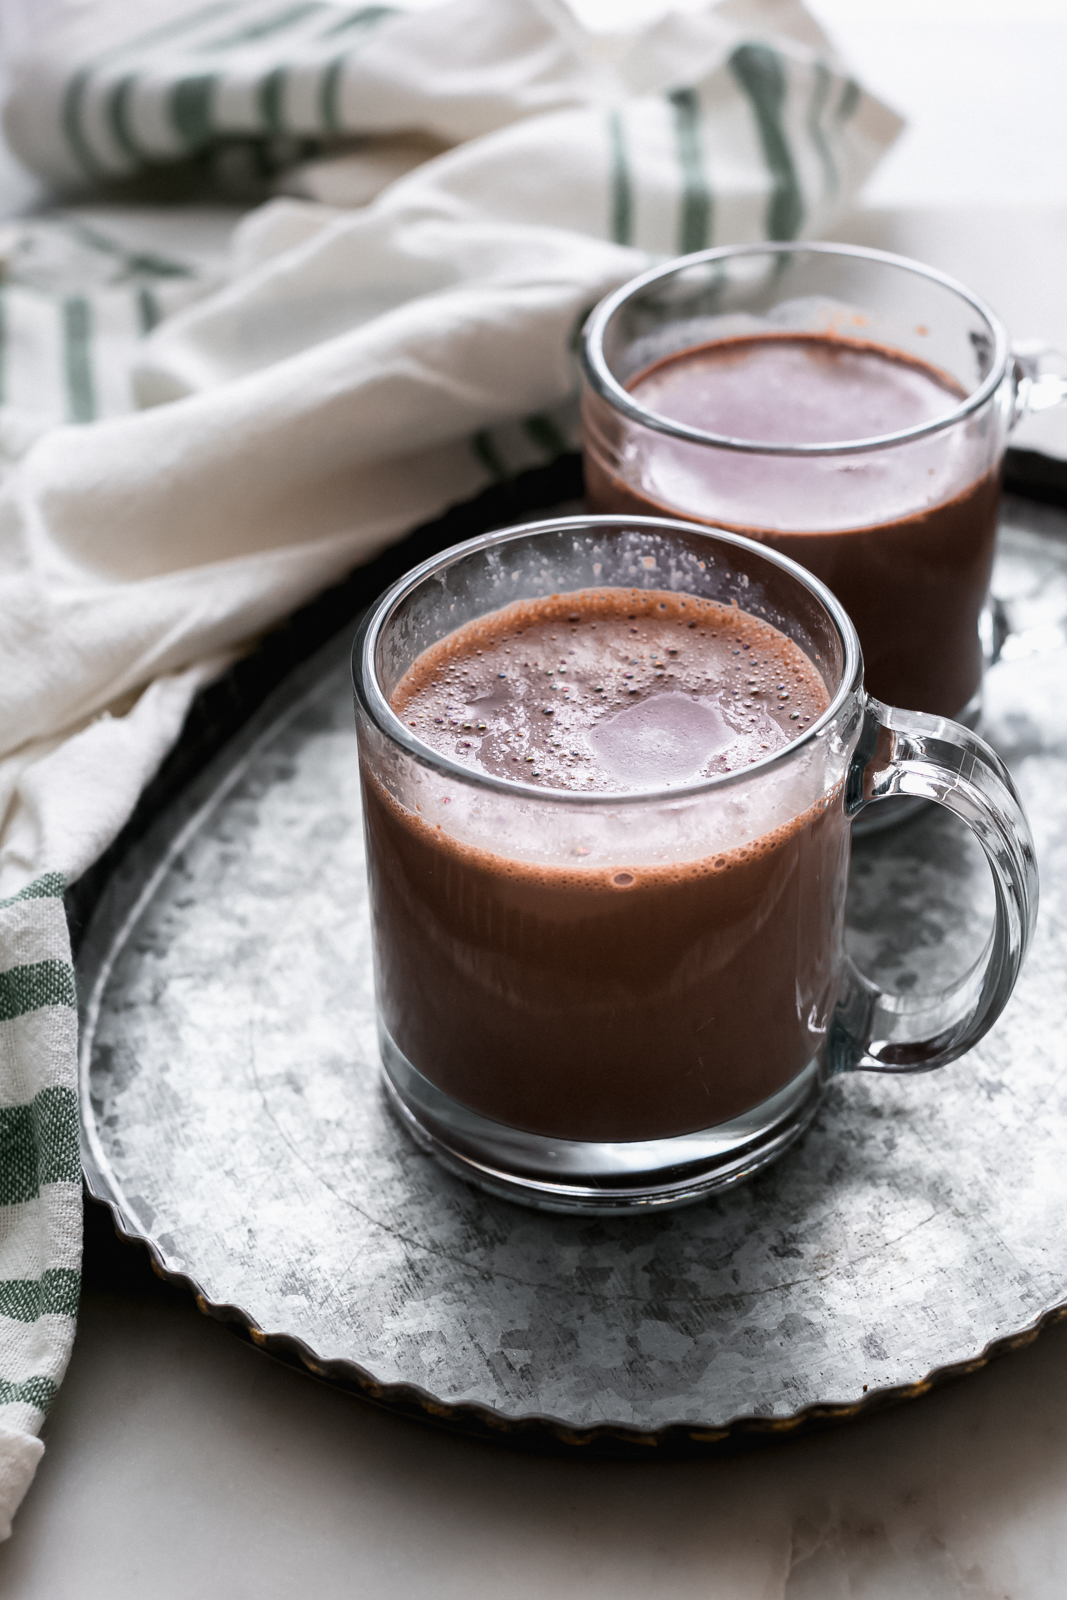 galvanized tray holding two mugs of hot chocolate